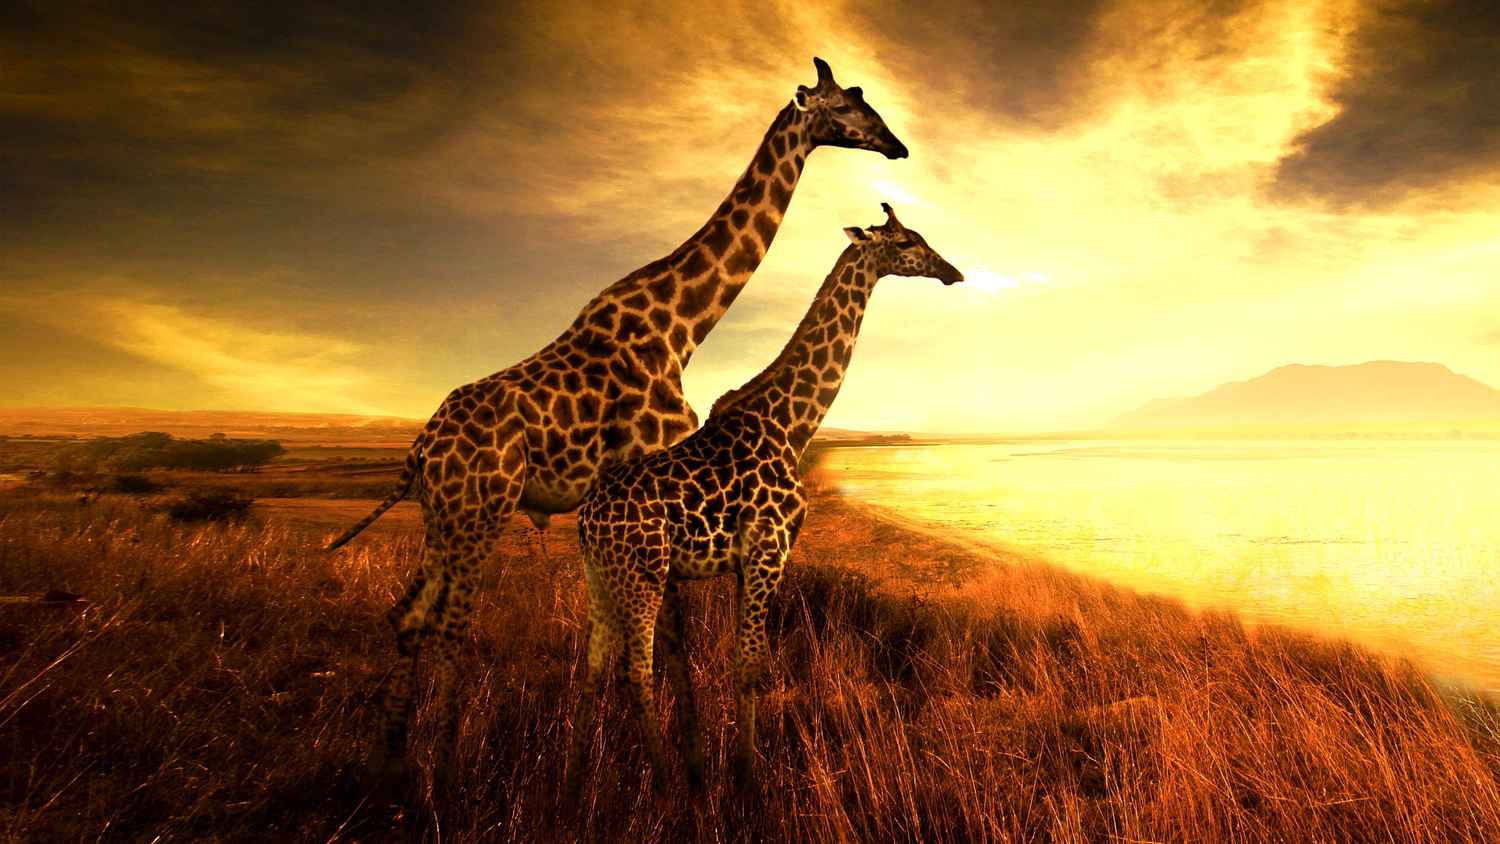 Saving Giraffes: The Long Journey Home